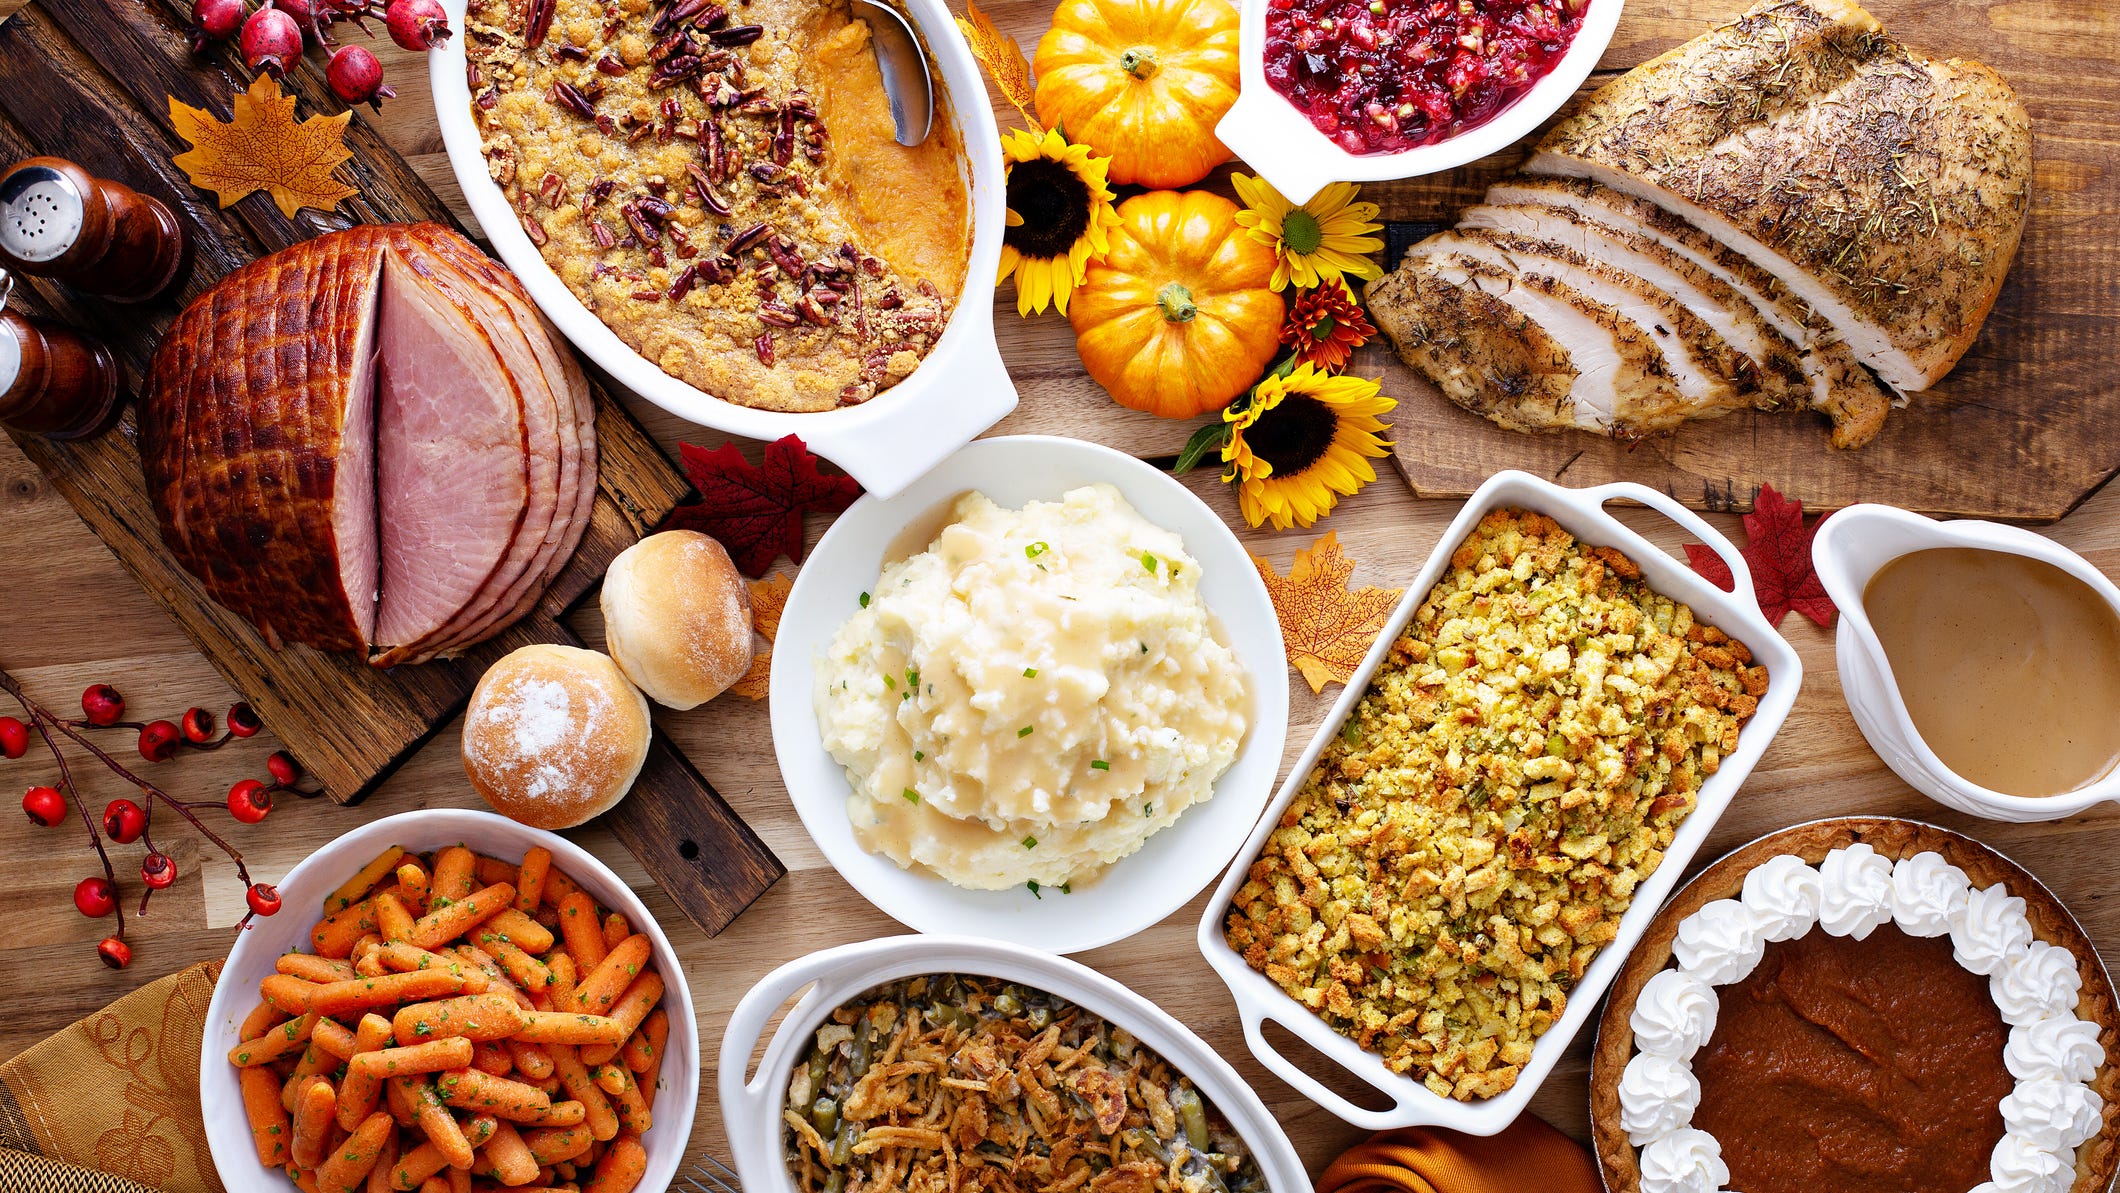 Restaurants serving Thanksgiving dinner preorder Turkey takeout